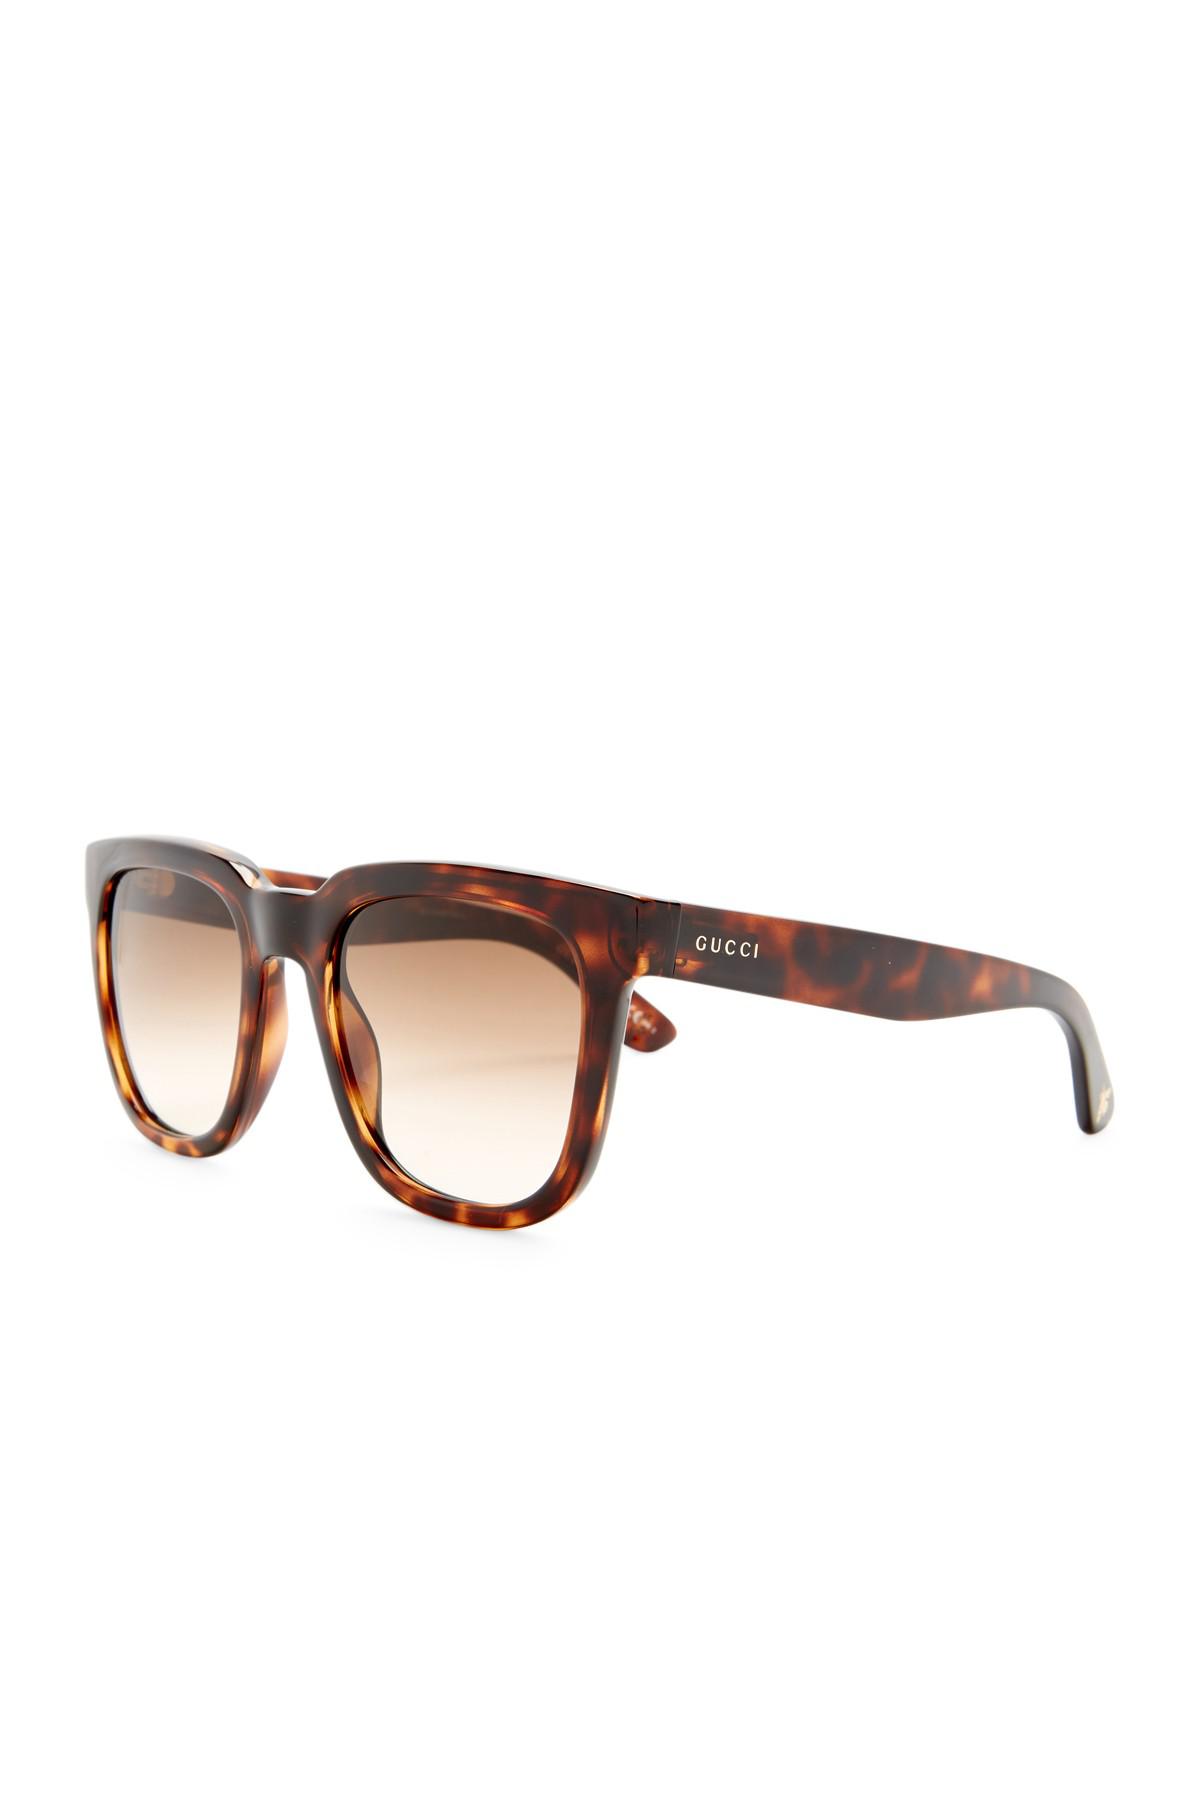 Lyst - Gucci Men&#39;s Oversized Square Plastic Frame Sunglasses in Brown for Men